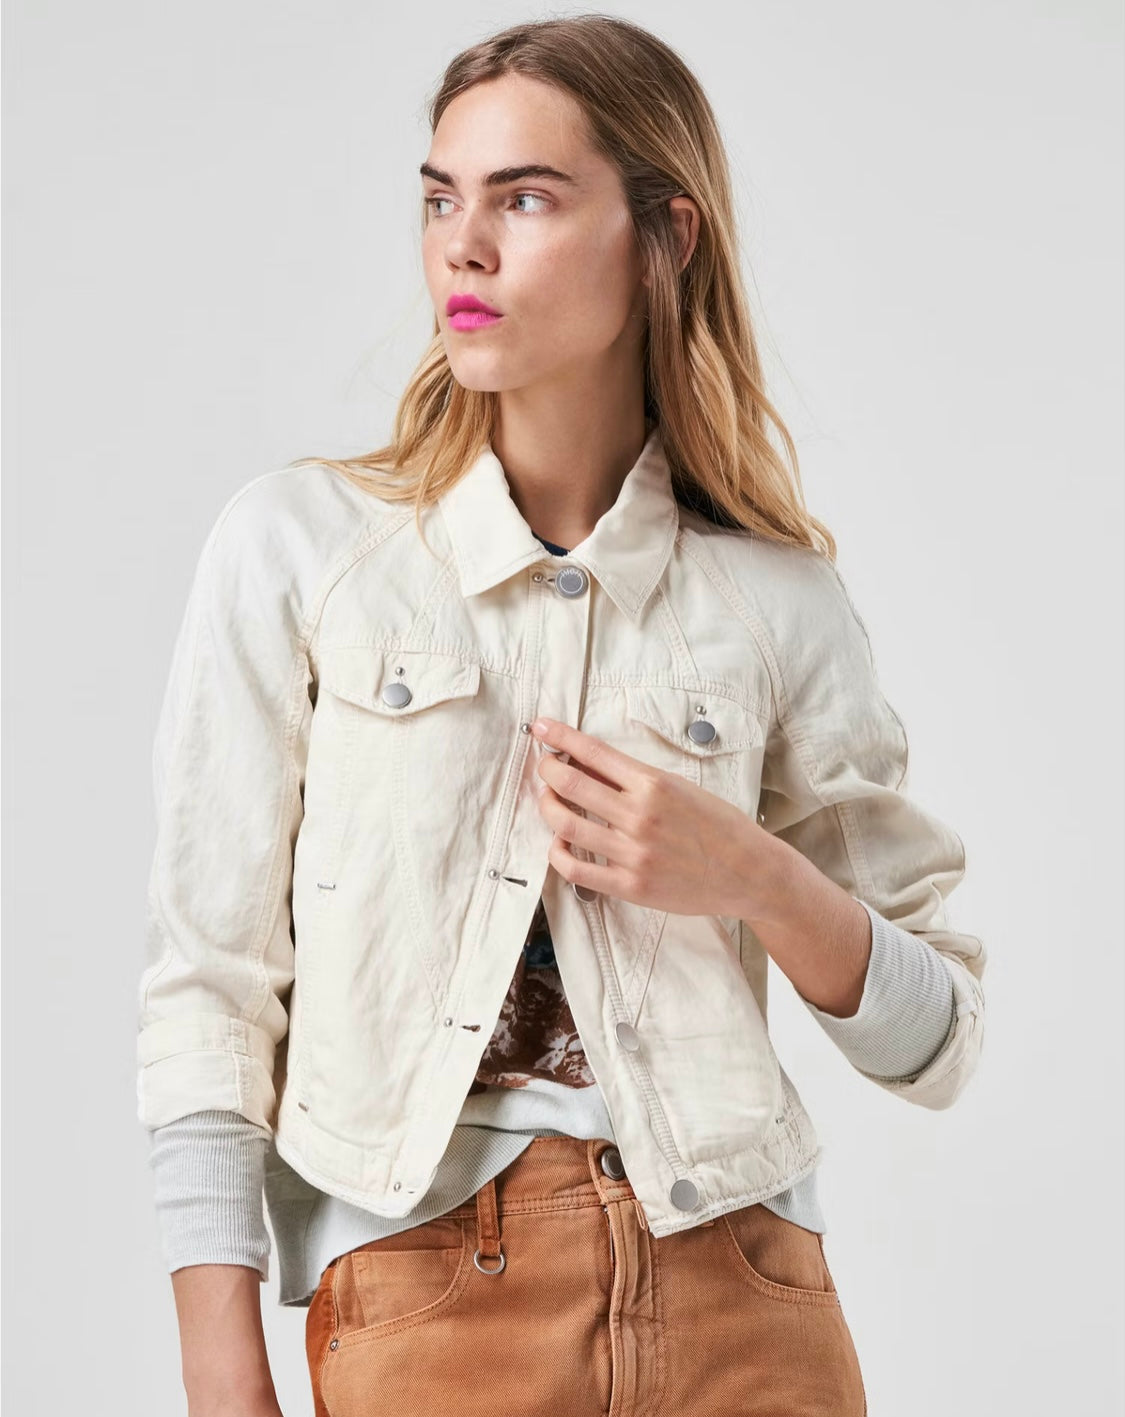 Pragmatic Short Jean Style Jacket